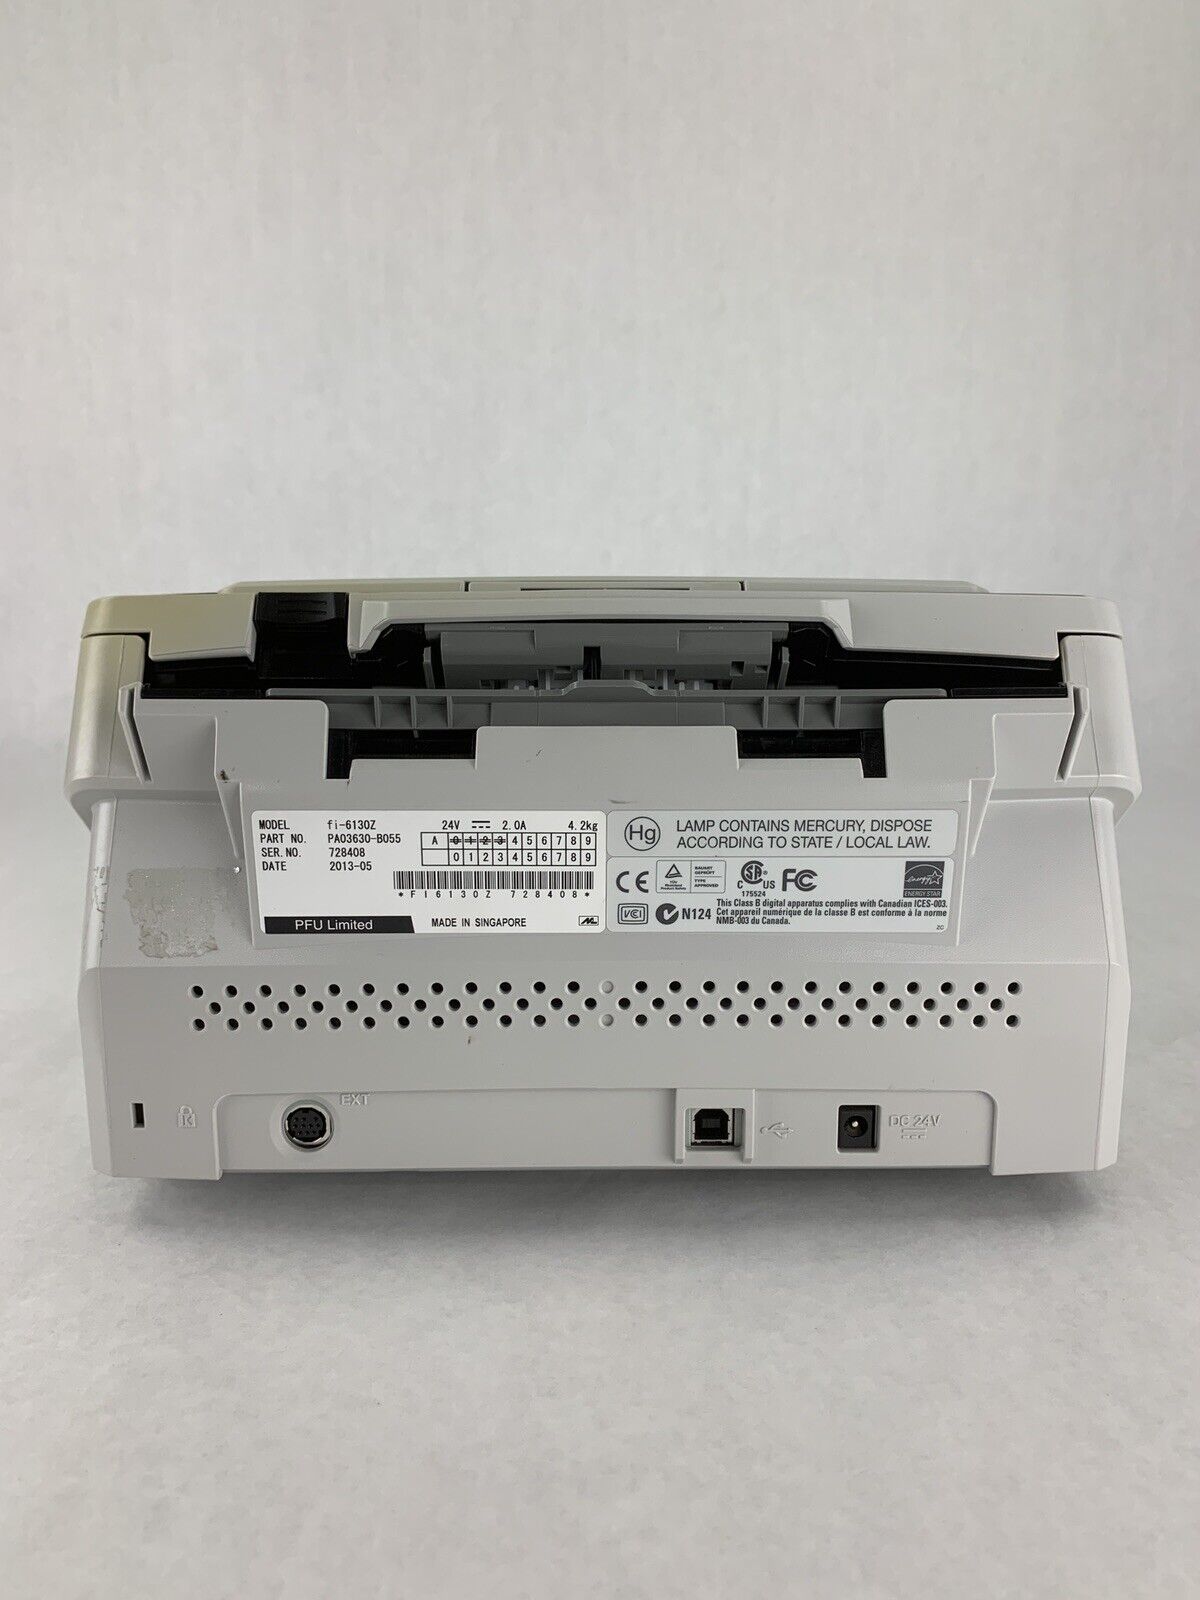 Fujitsu fi-6130z Duplex Color Sheet-Fed Document Scanner Tested No Paper Guide